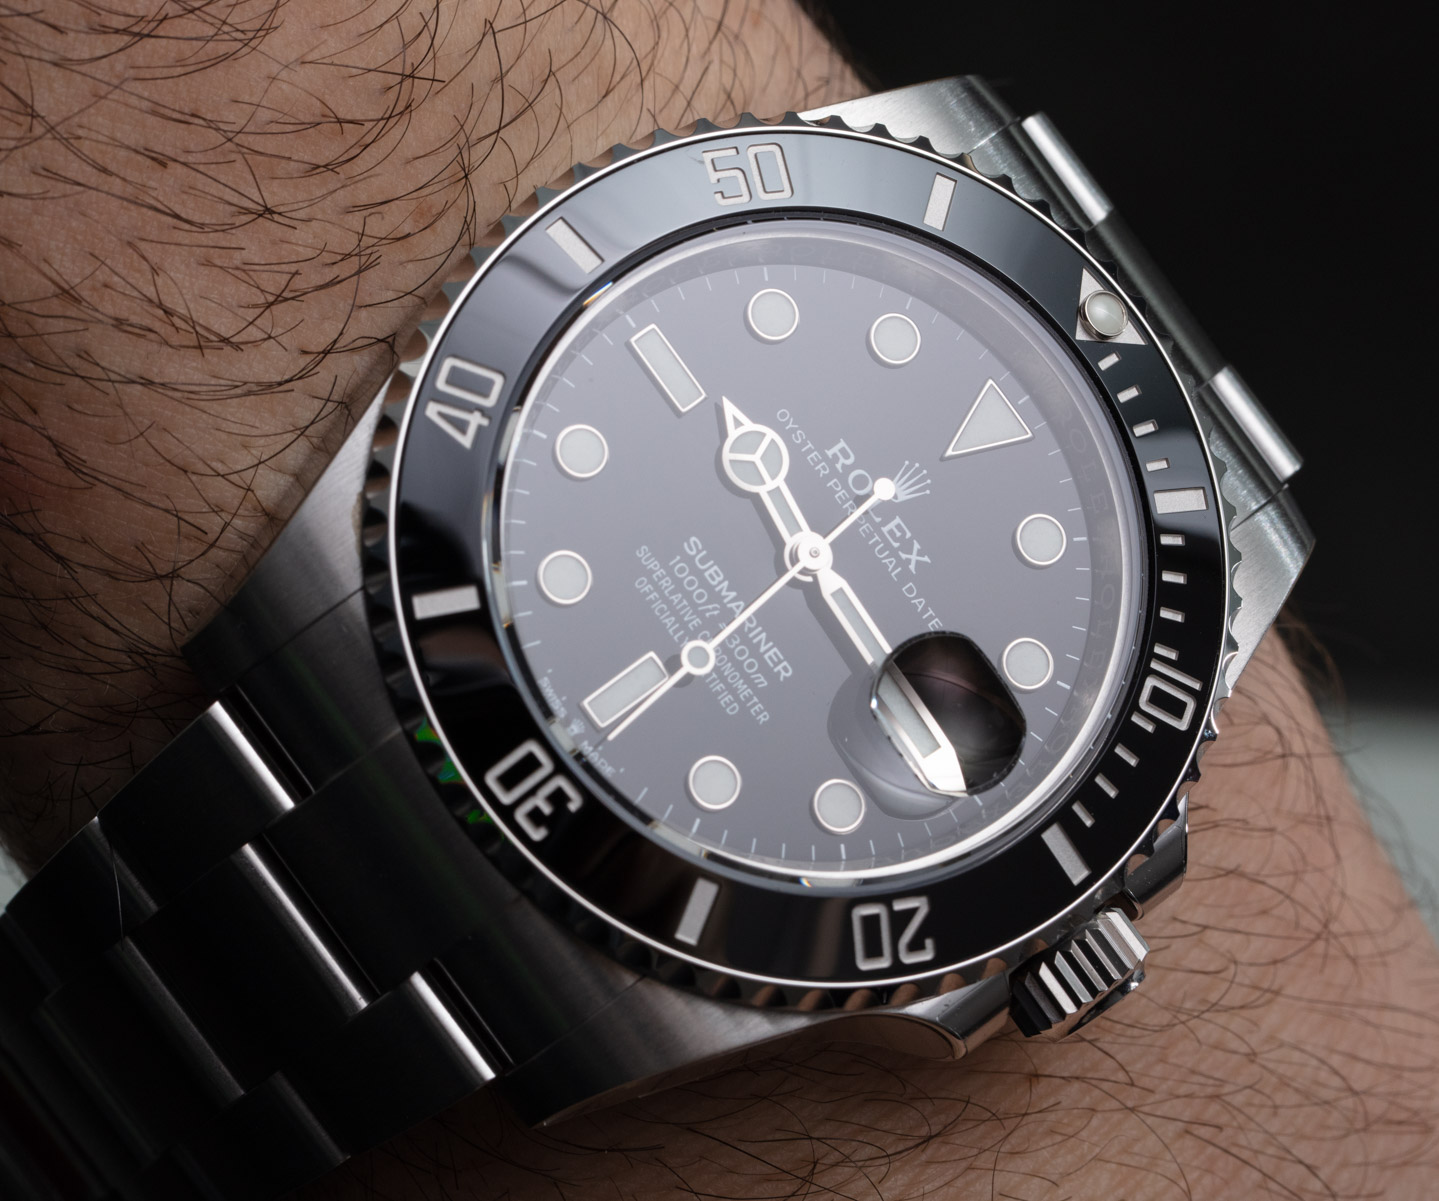 Hands-On: Rolex Submariner 126610LN Watch | aBlogtoWatch